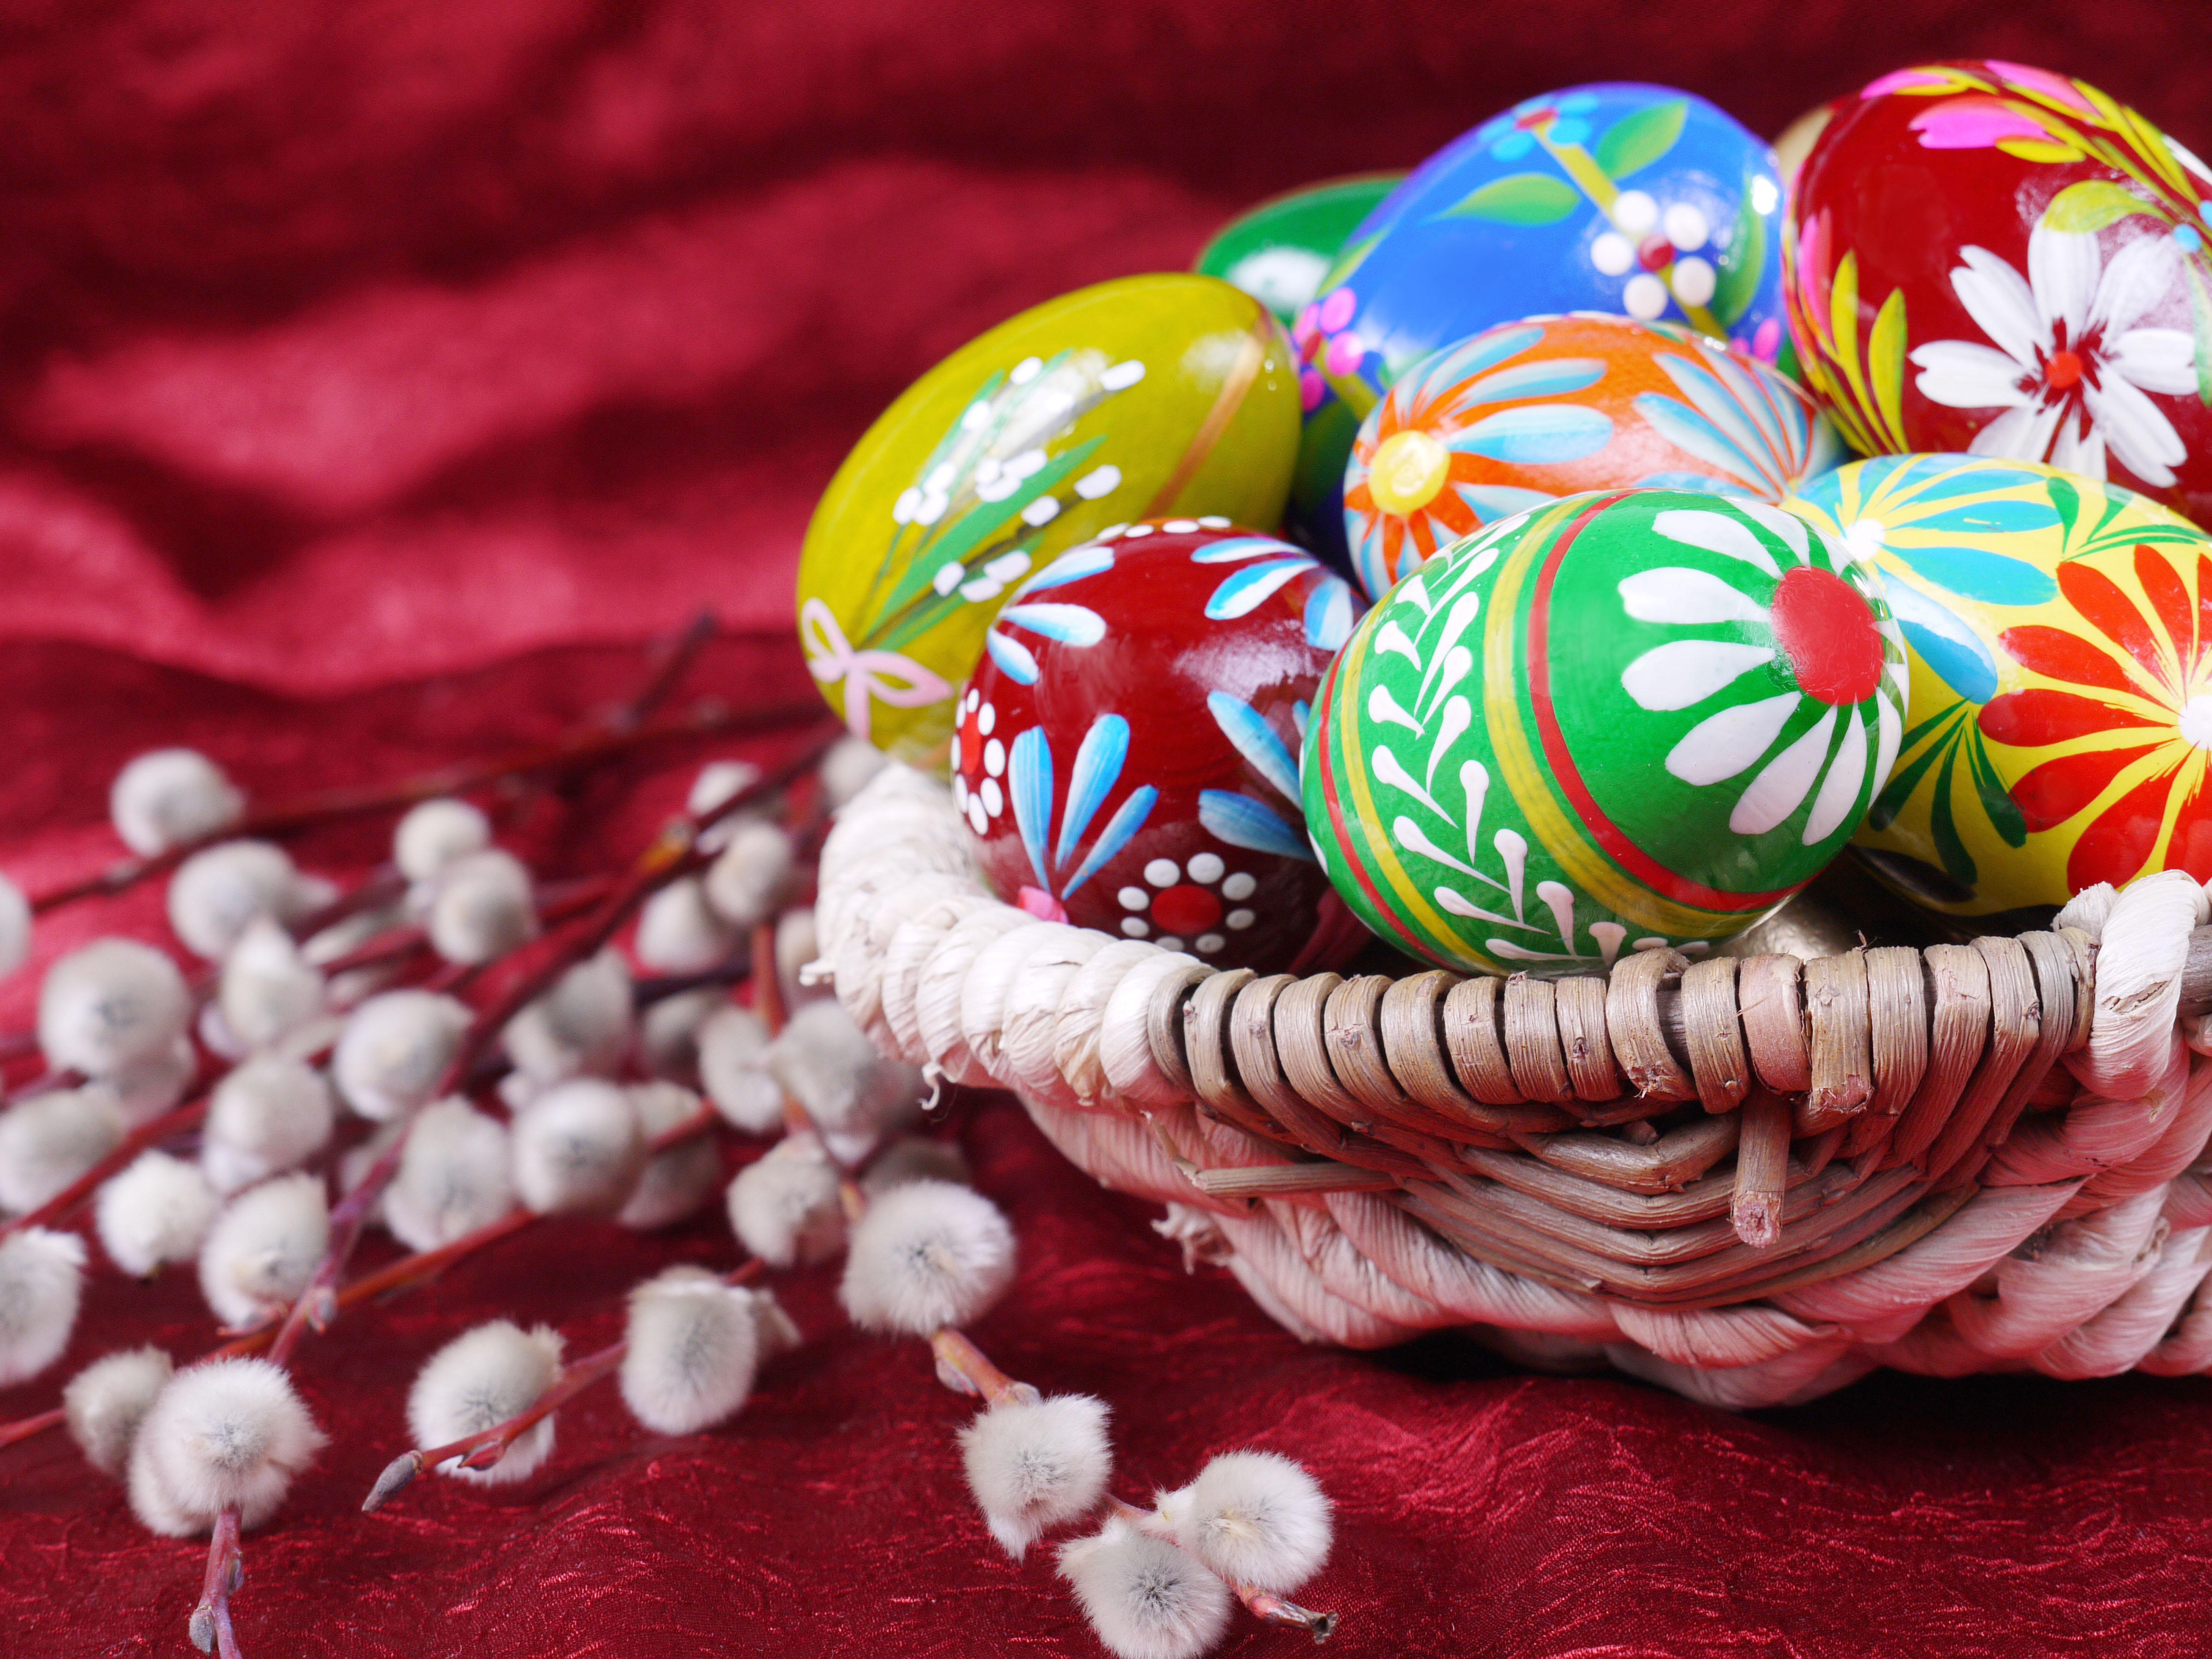 Как красиво покрасить яйца на Пасху - 30 фото